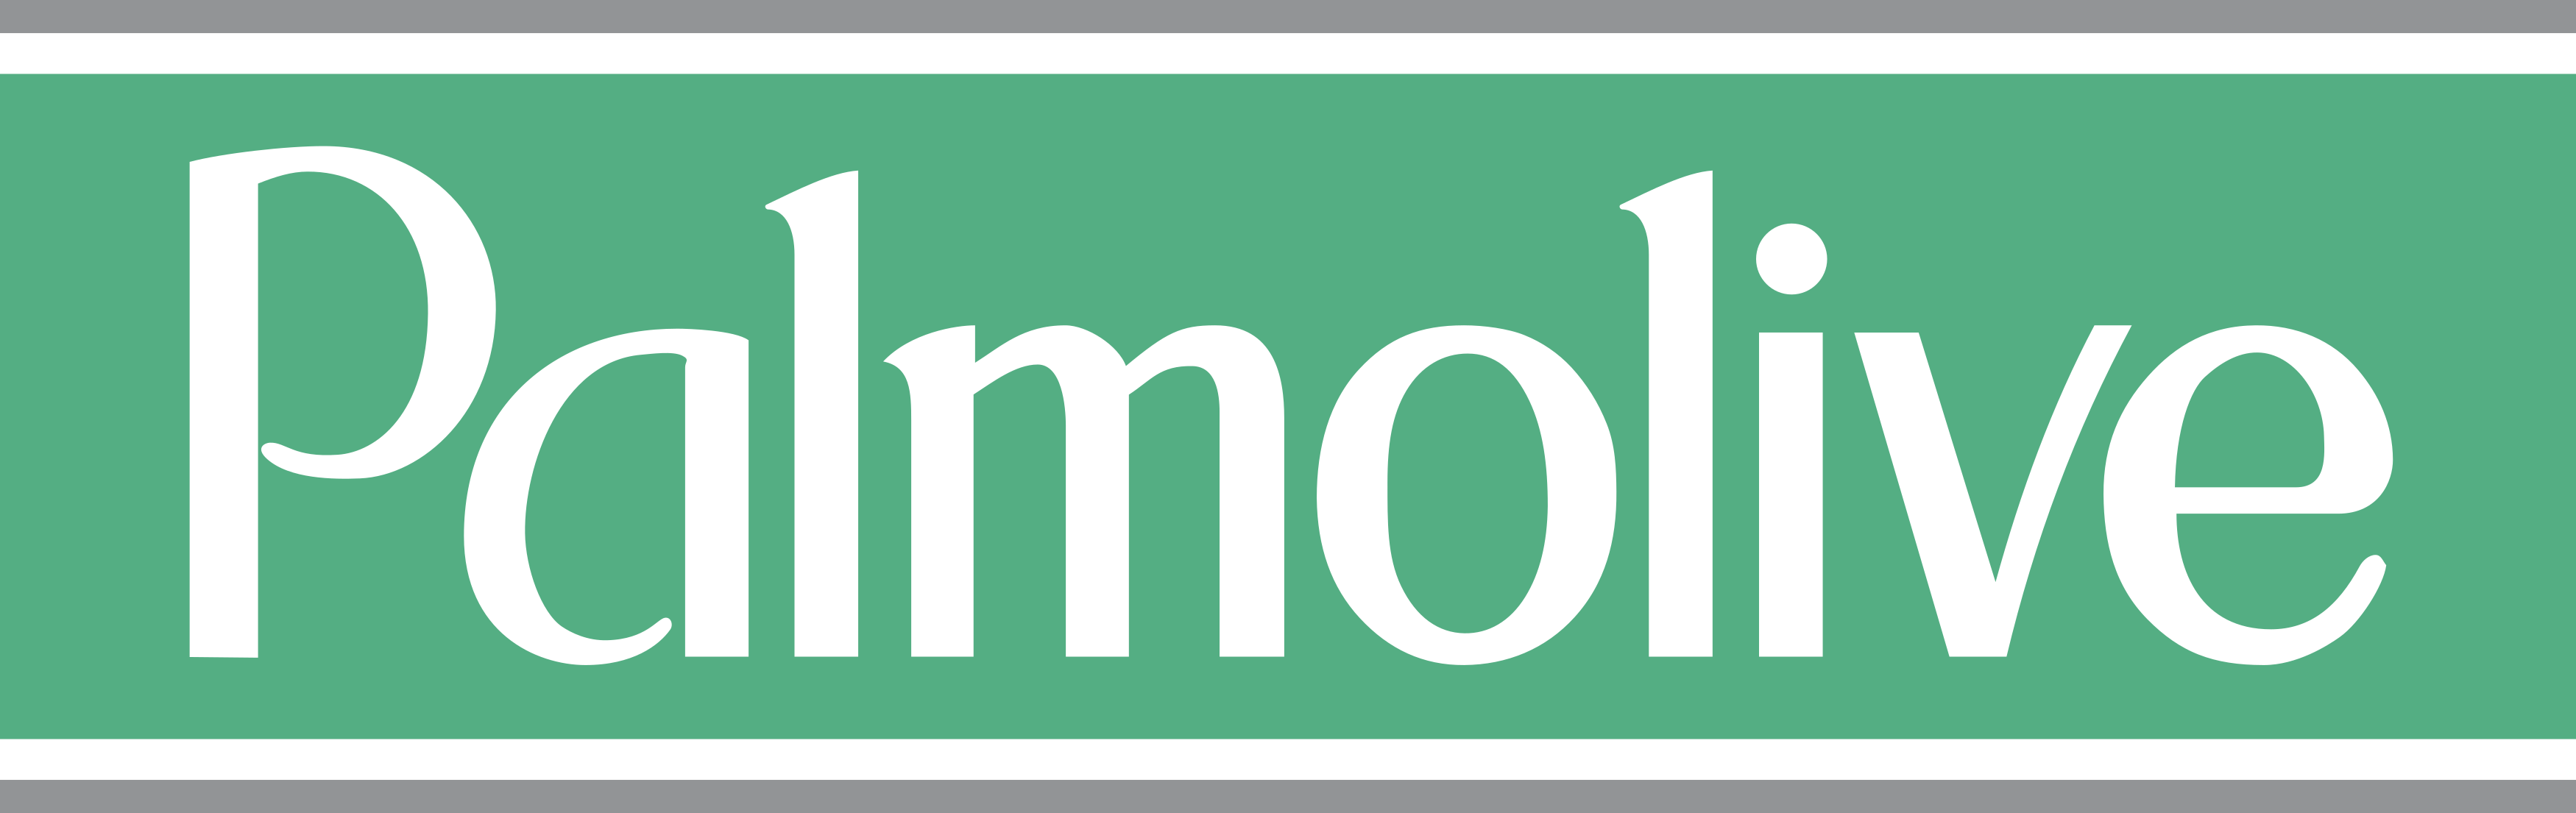 Palmolive Logo.